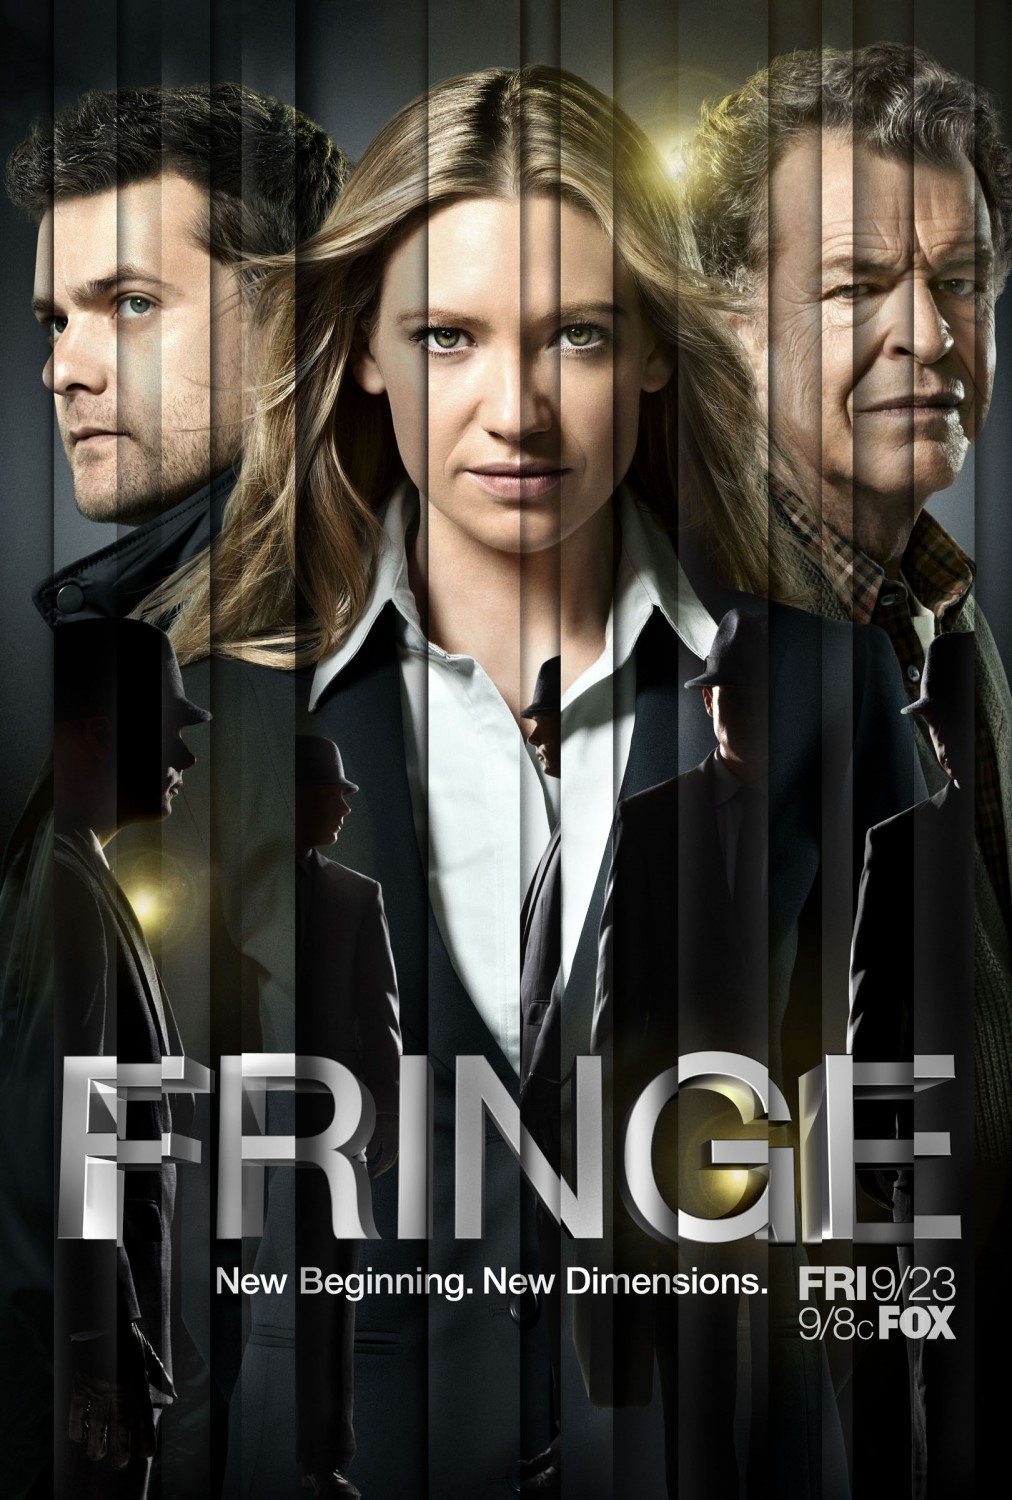 Extra Large TV Poster Image for Fringe (#24 of 33)